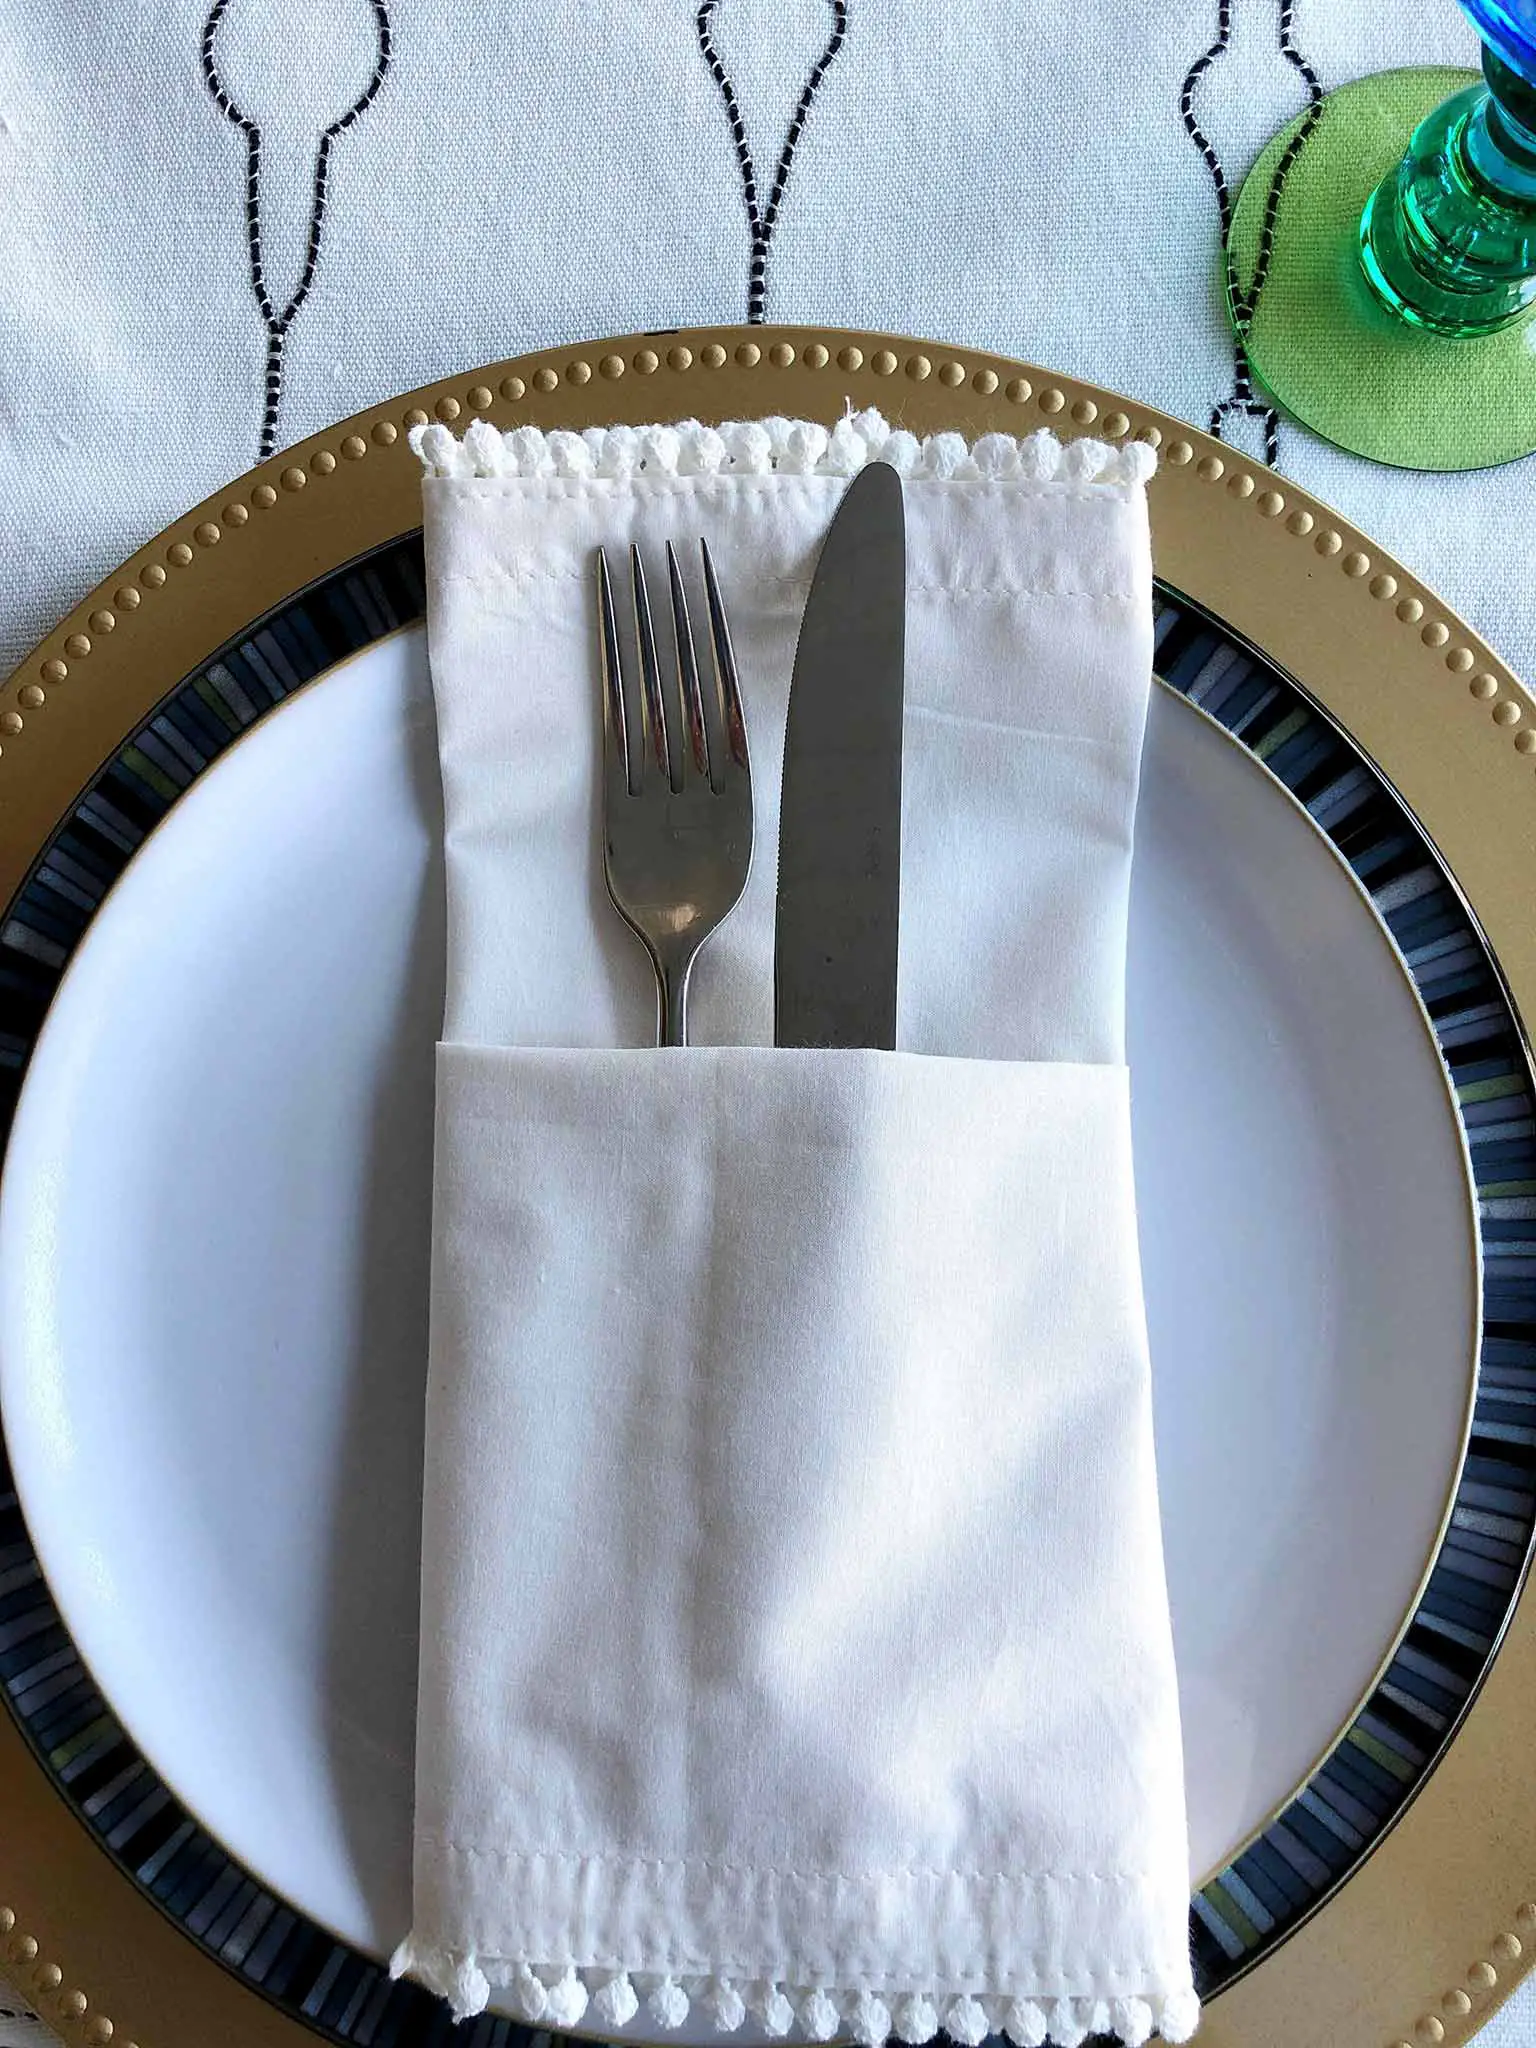 Pocket napkin fold | How to Create a Beautiful Tablescape on a Budget | That Homebird Life Blog #christmasdecor #tablescape